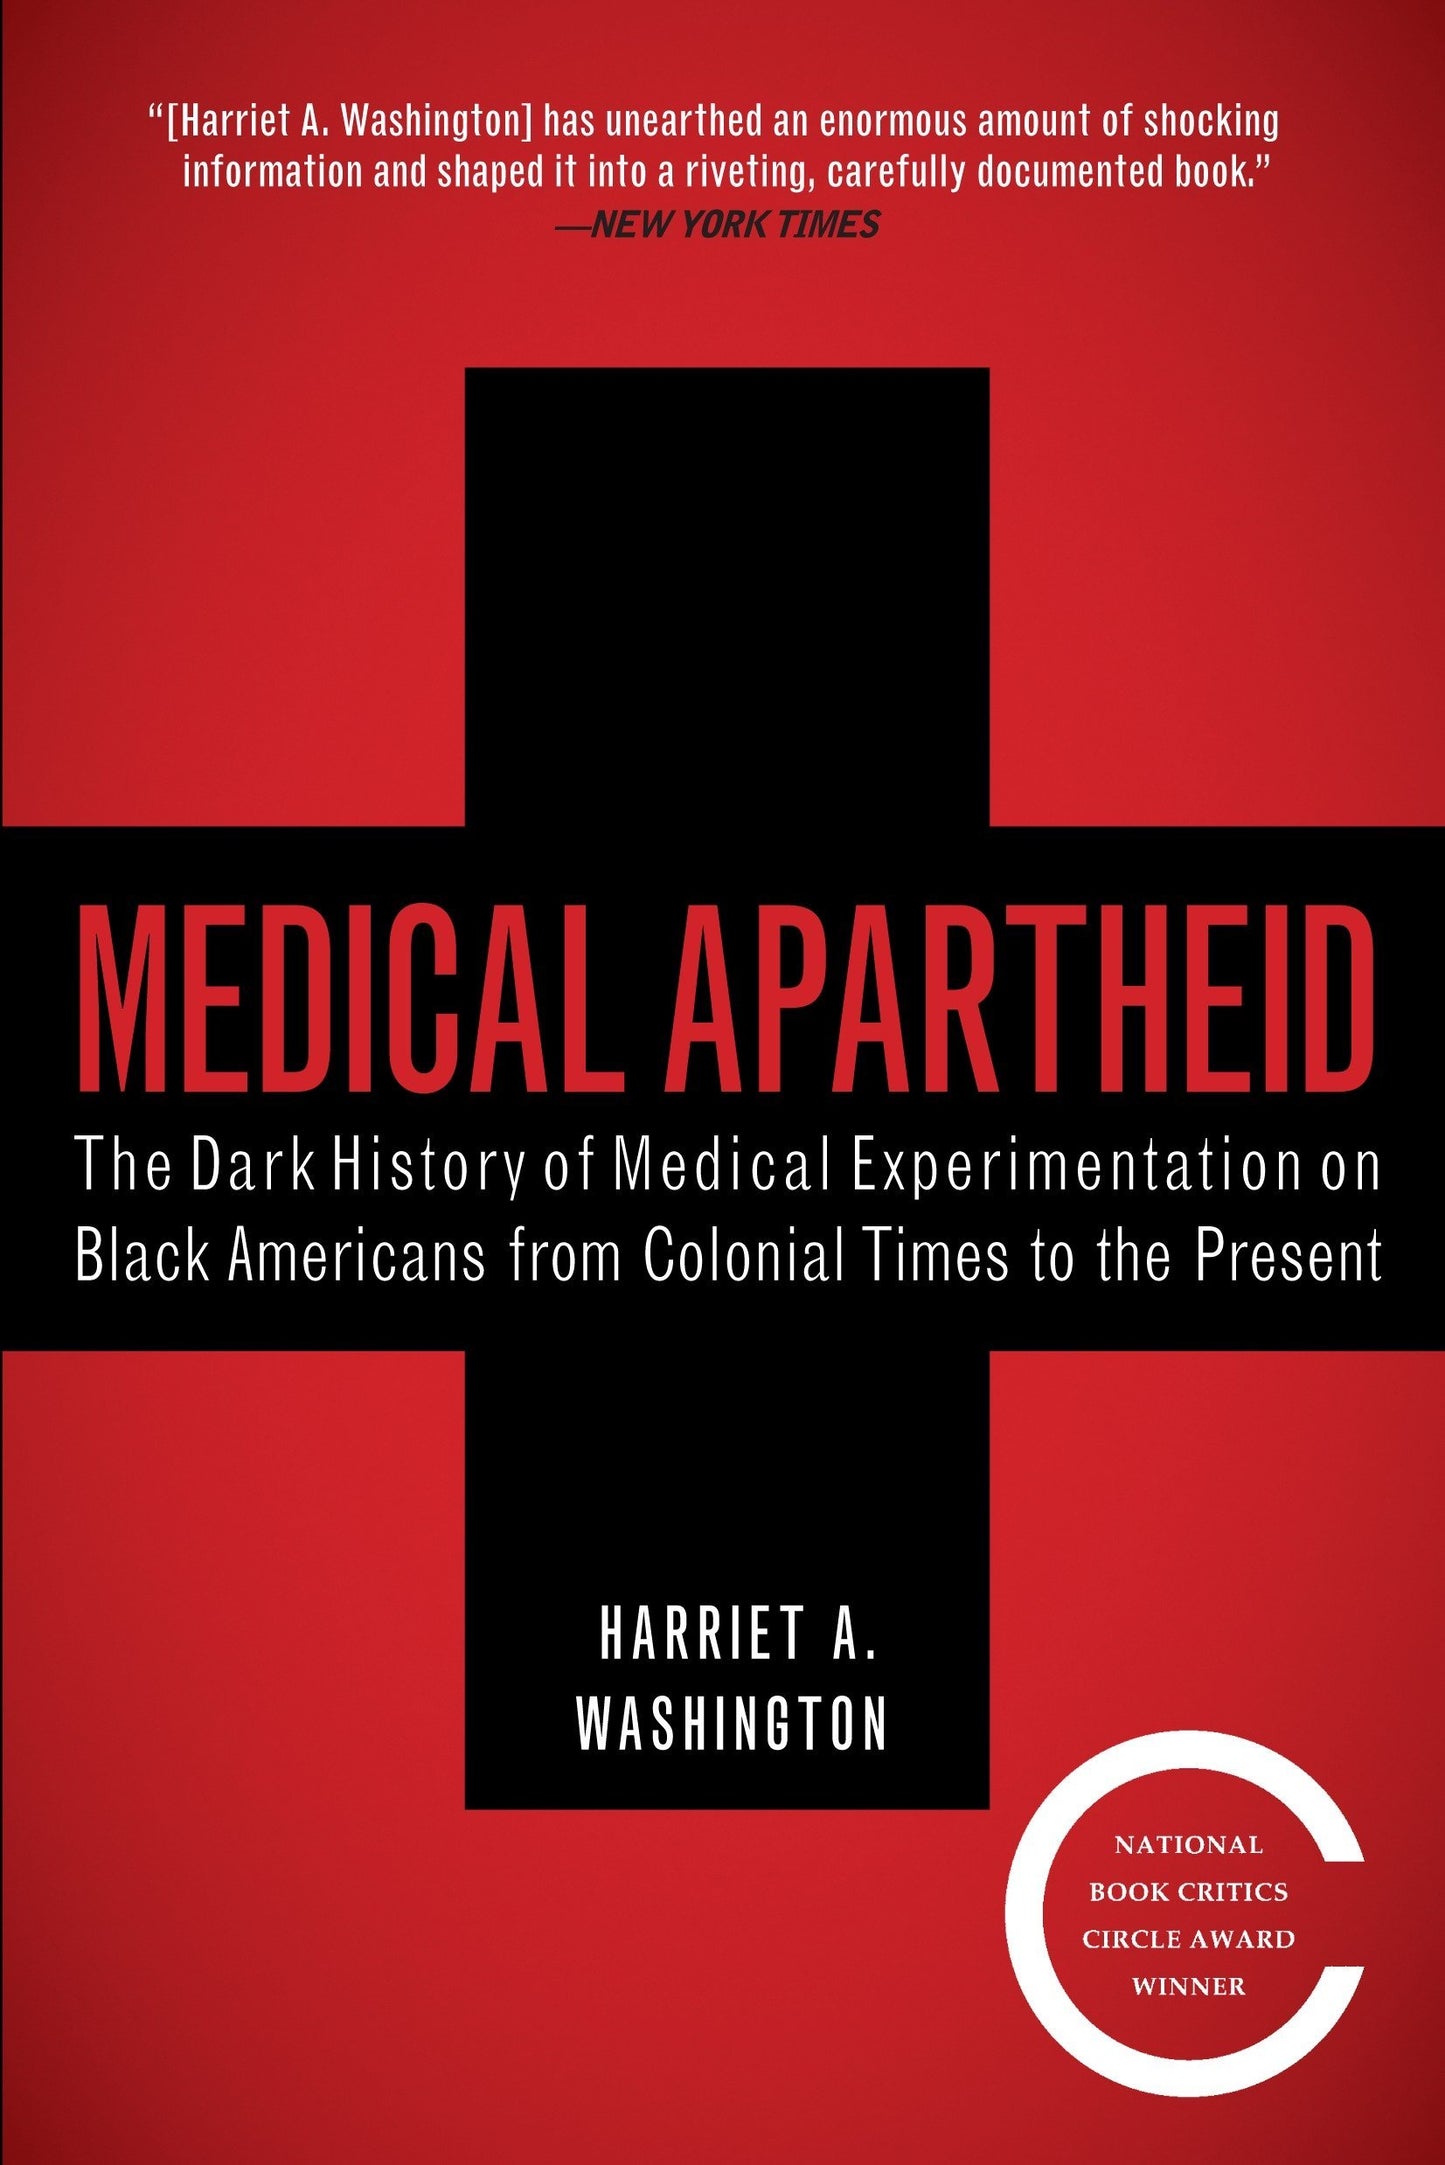 Medical Apartheid, by Harriet A. Washington